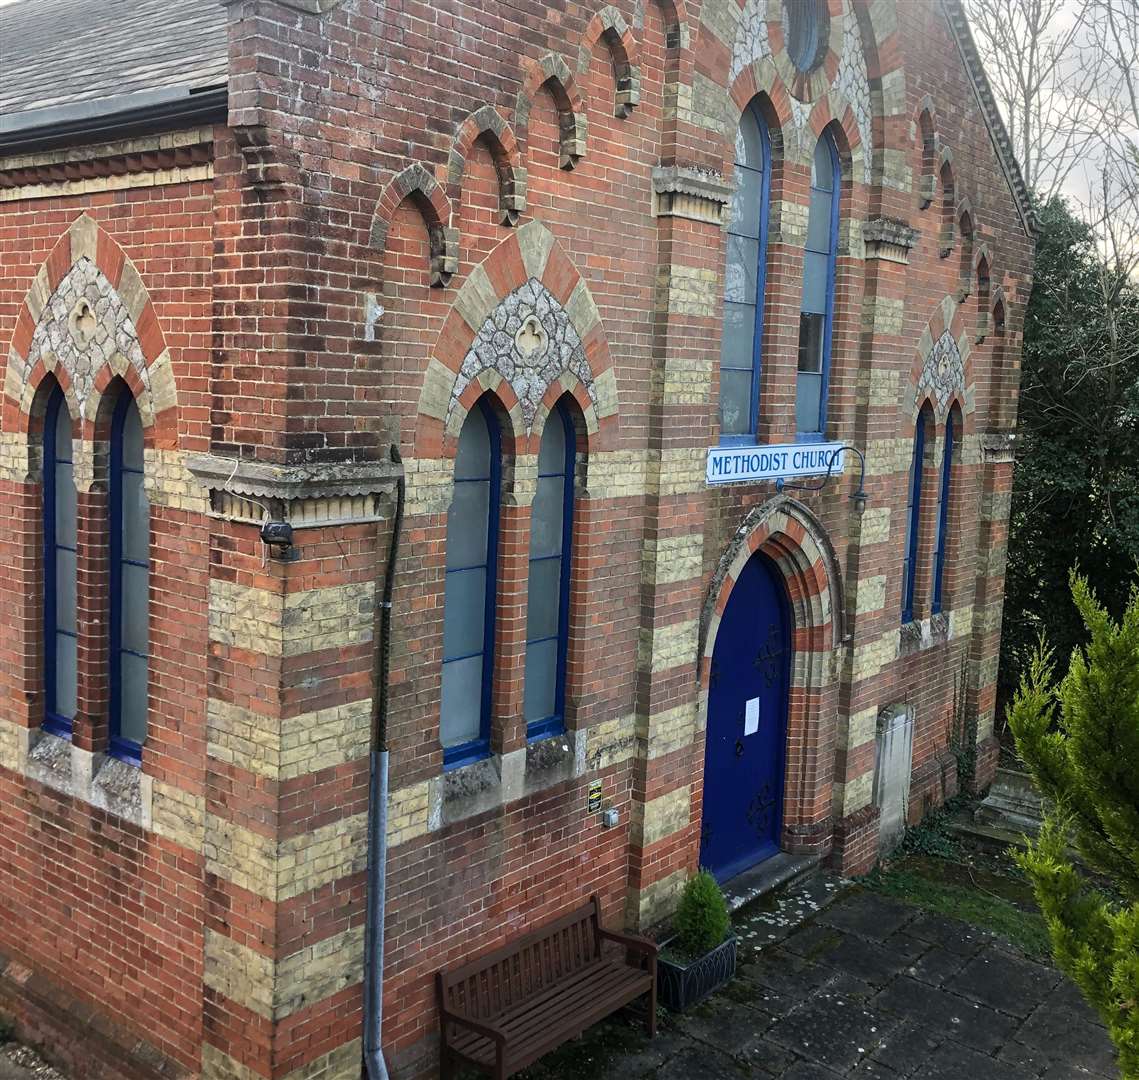 Headcorn Methodist Church